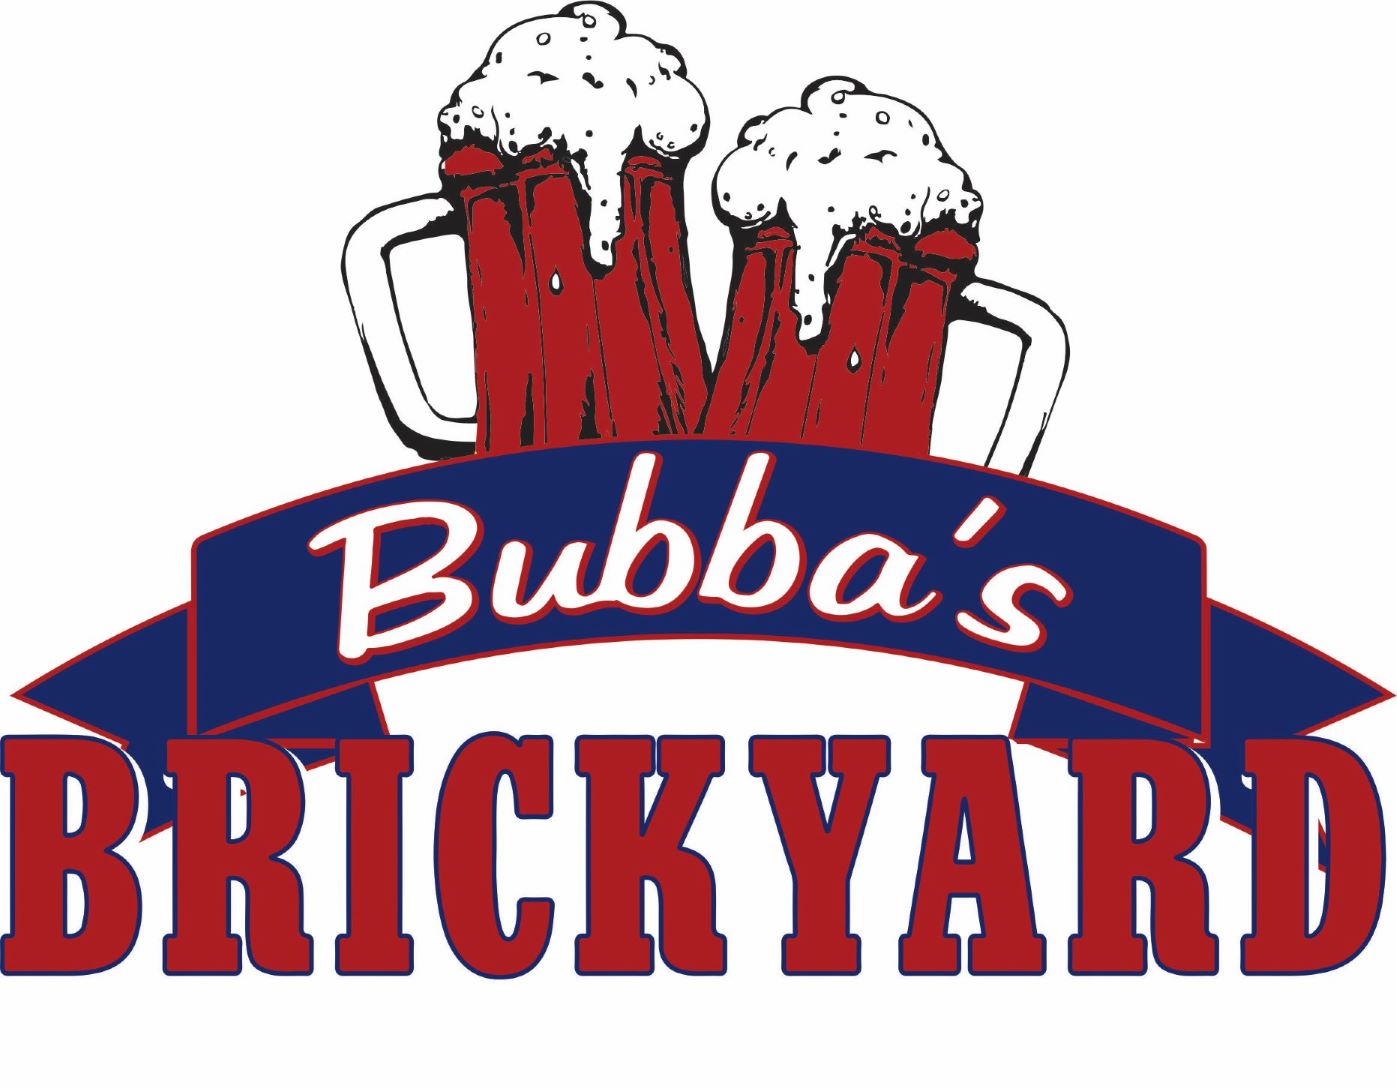 Bubba's Brickyard